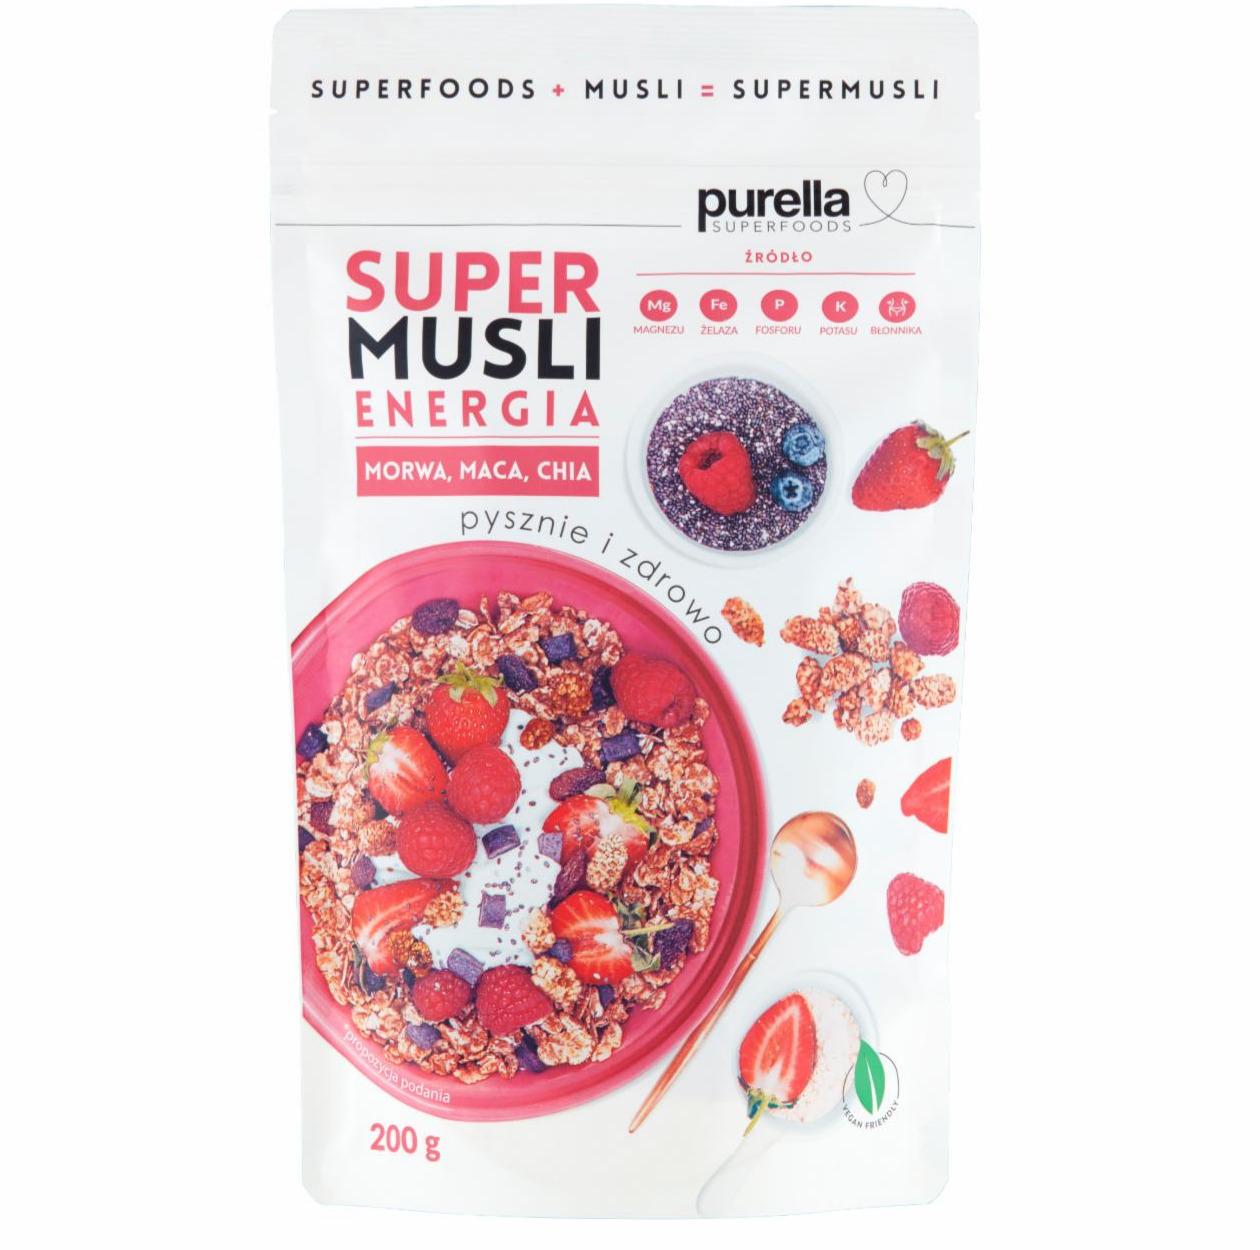 Zdjęcia - Purella Superfoods Supermusli energia 200 g